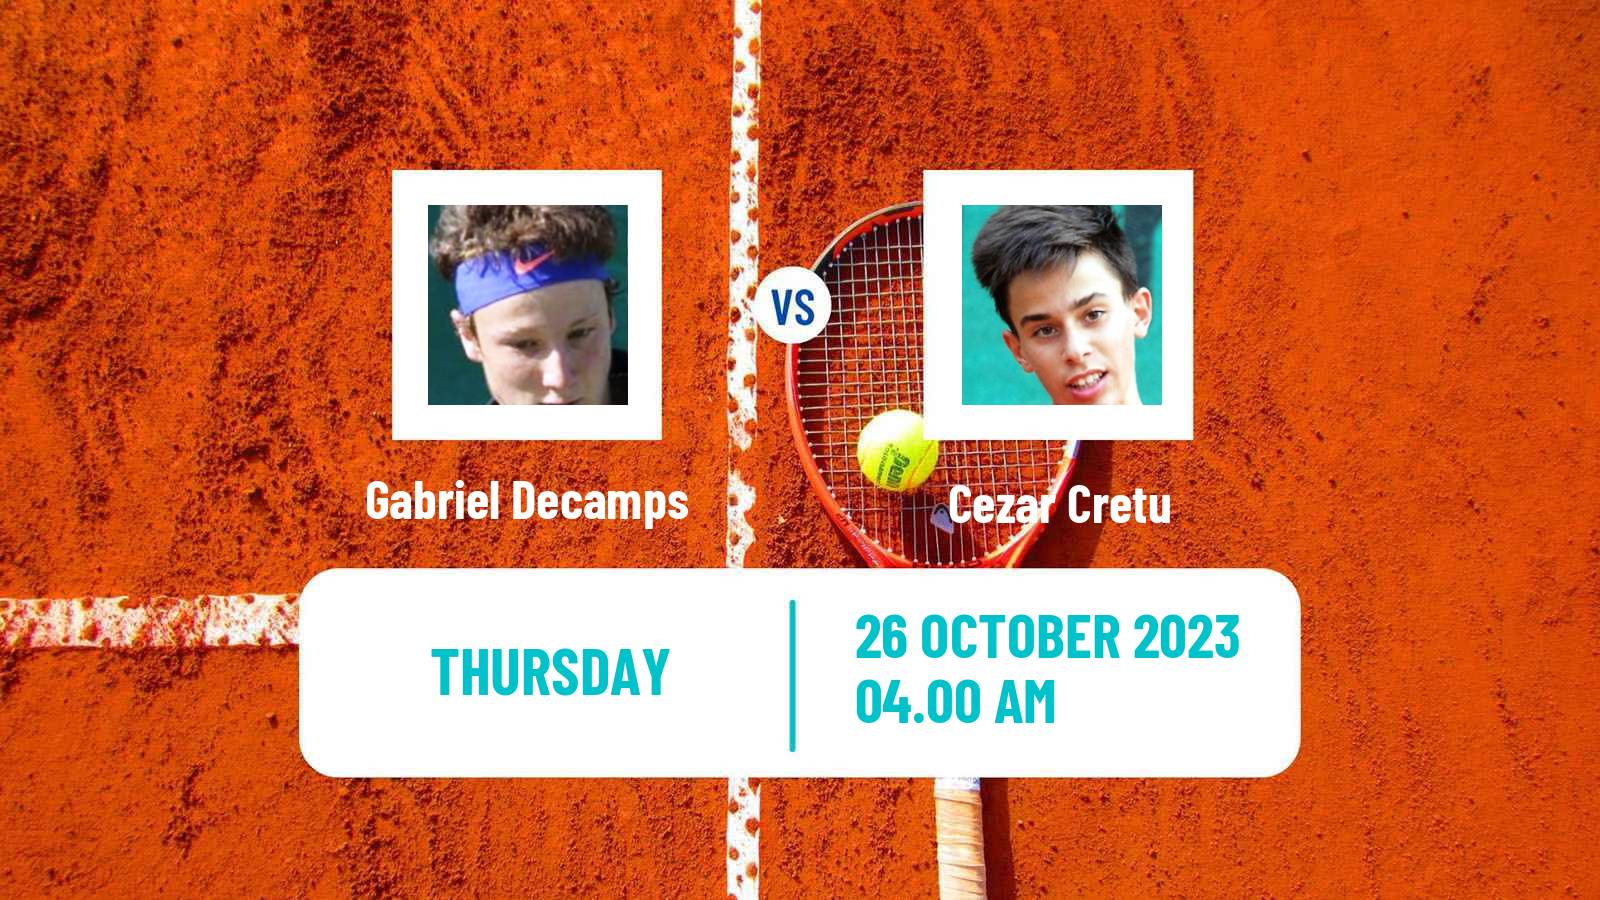 Tennis ITF M15 Heraklion 4 Men Gabriel Decamps - Cezar Cretu